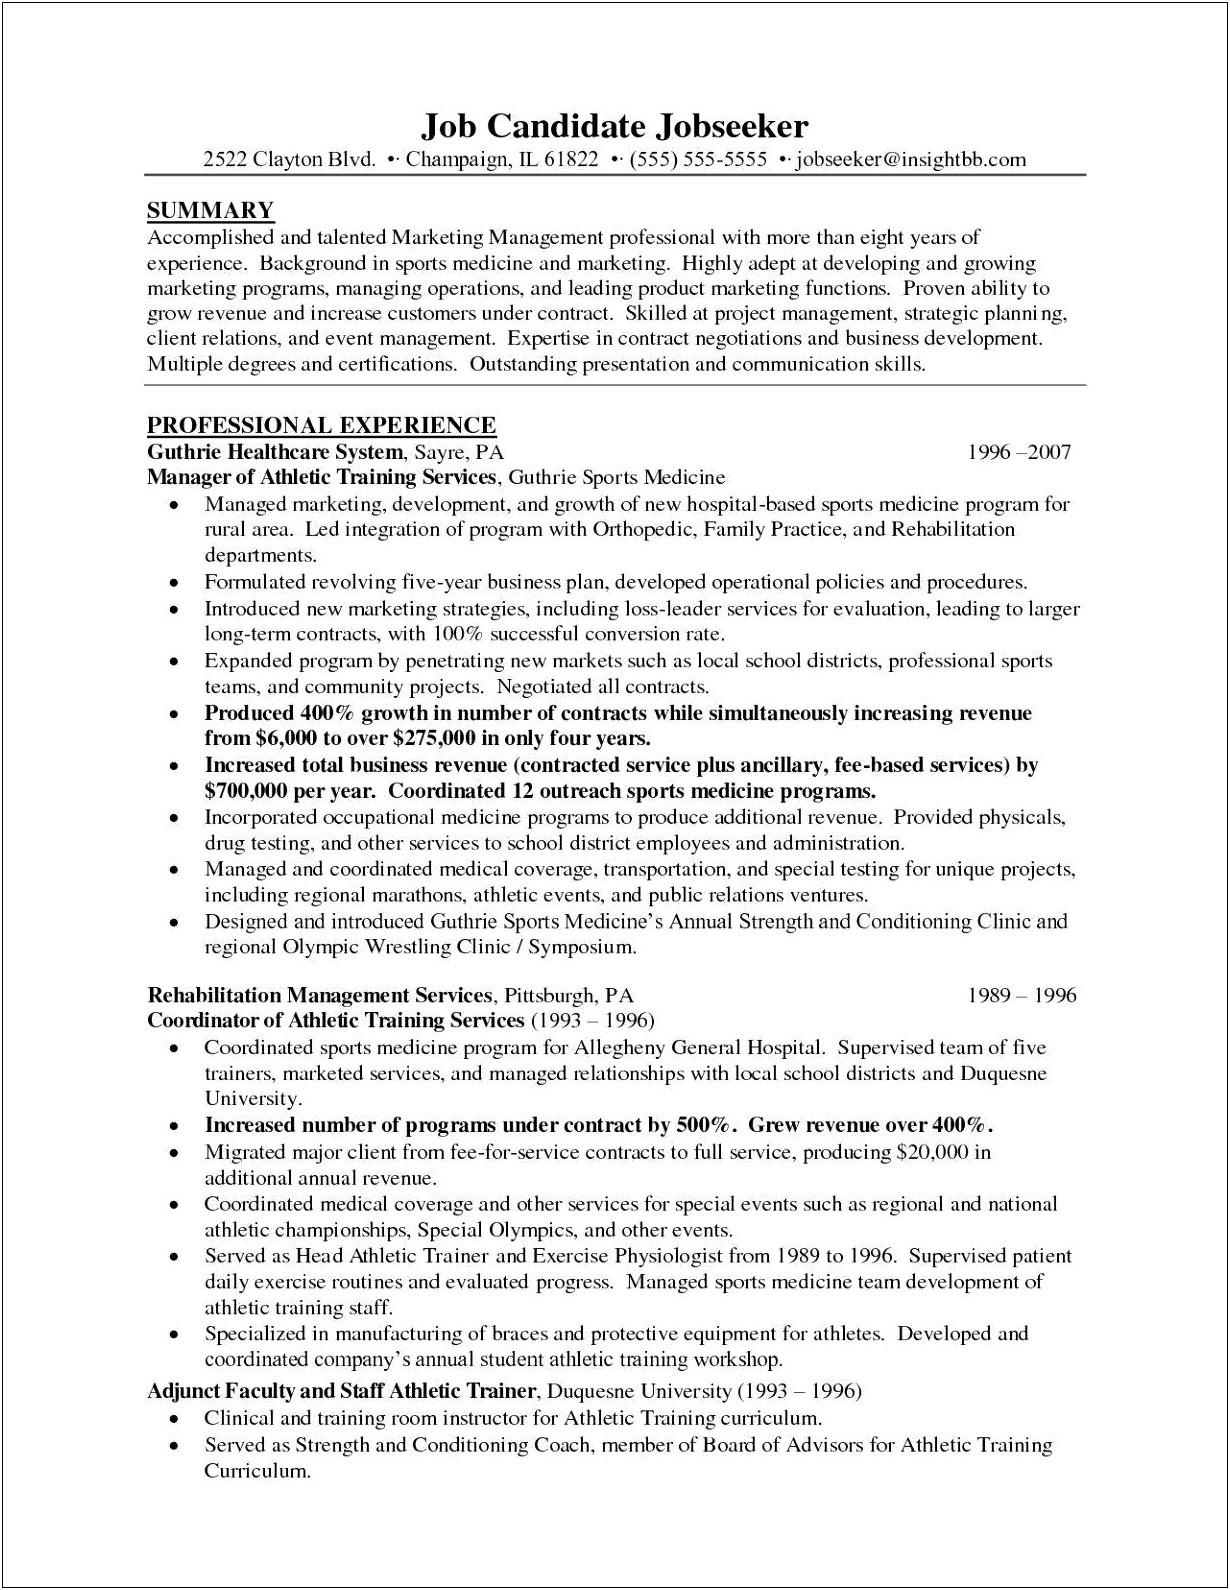 Resume Restaurant Supervisor Job Description